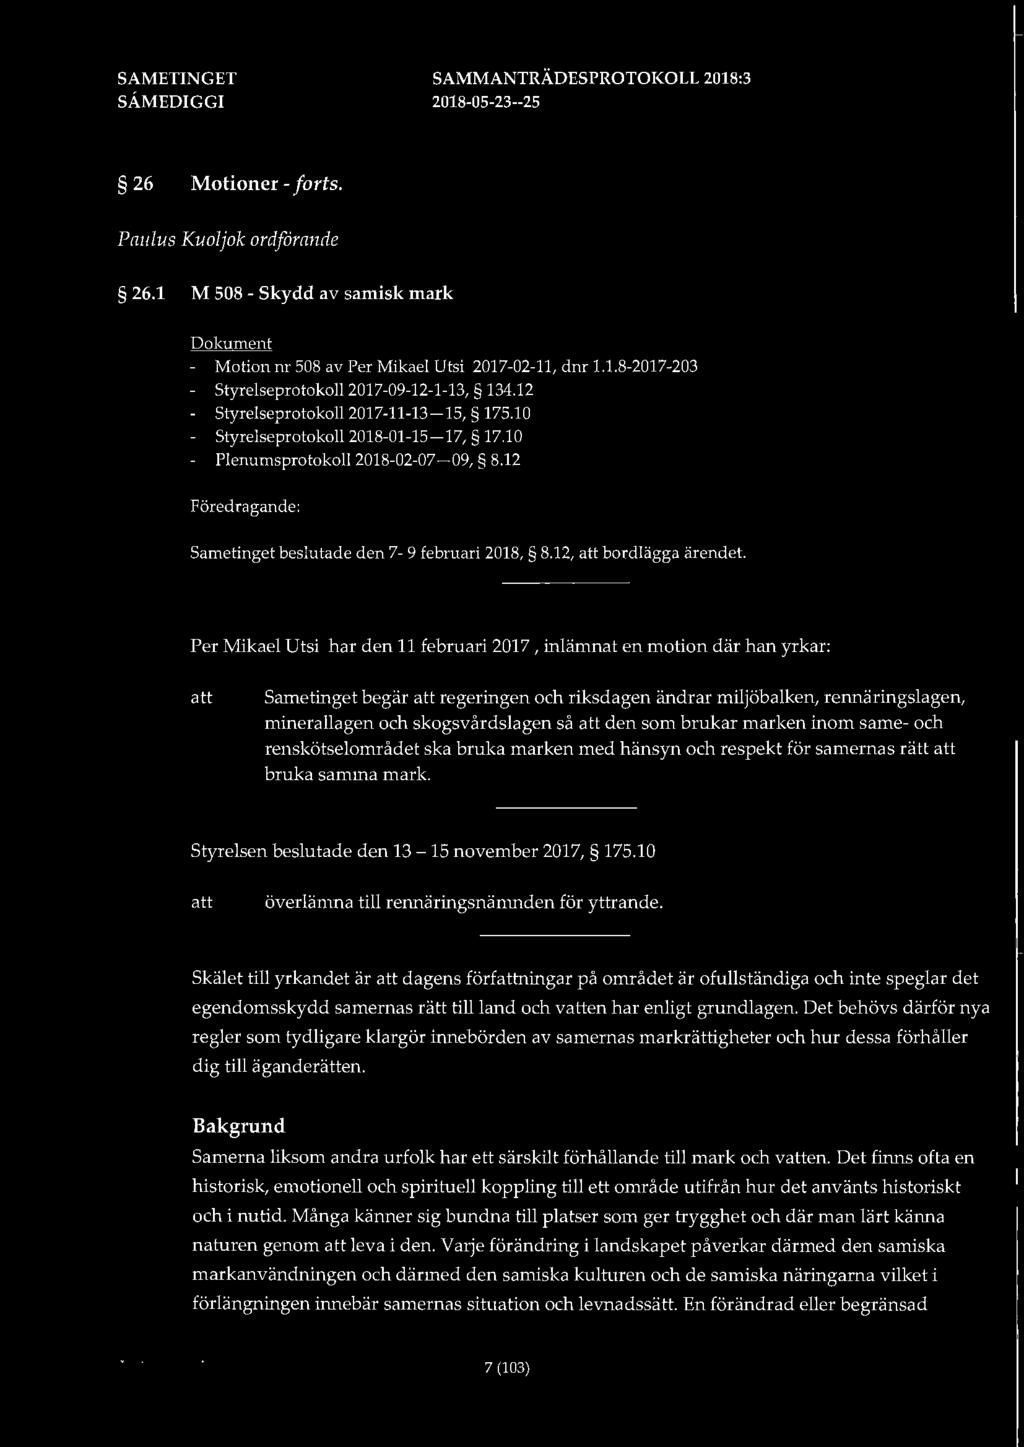 26 Motioner - forts. Paulus Kuoljok ordforande 26.1 M 508- Skydd av samisk mark Dokument - Motion nr 508 av Per Mikael Utsi 2017-02-11, dnr 1.1.8-2017-203 - Styrelseprotokoll 2017-09-12-1-13, 134.